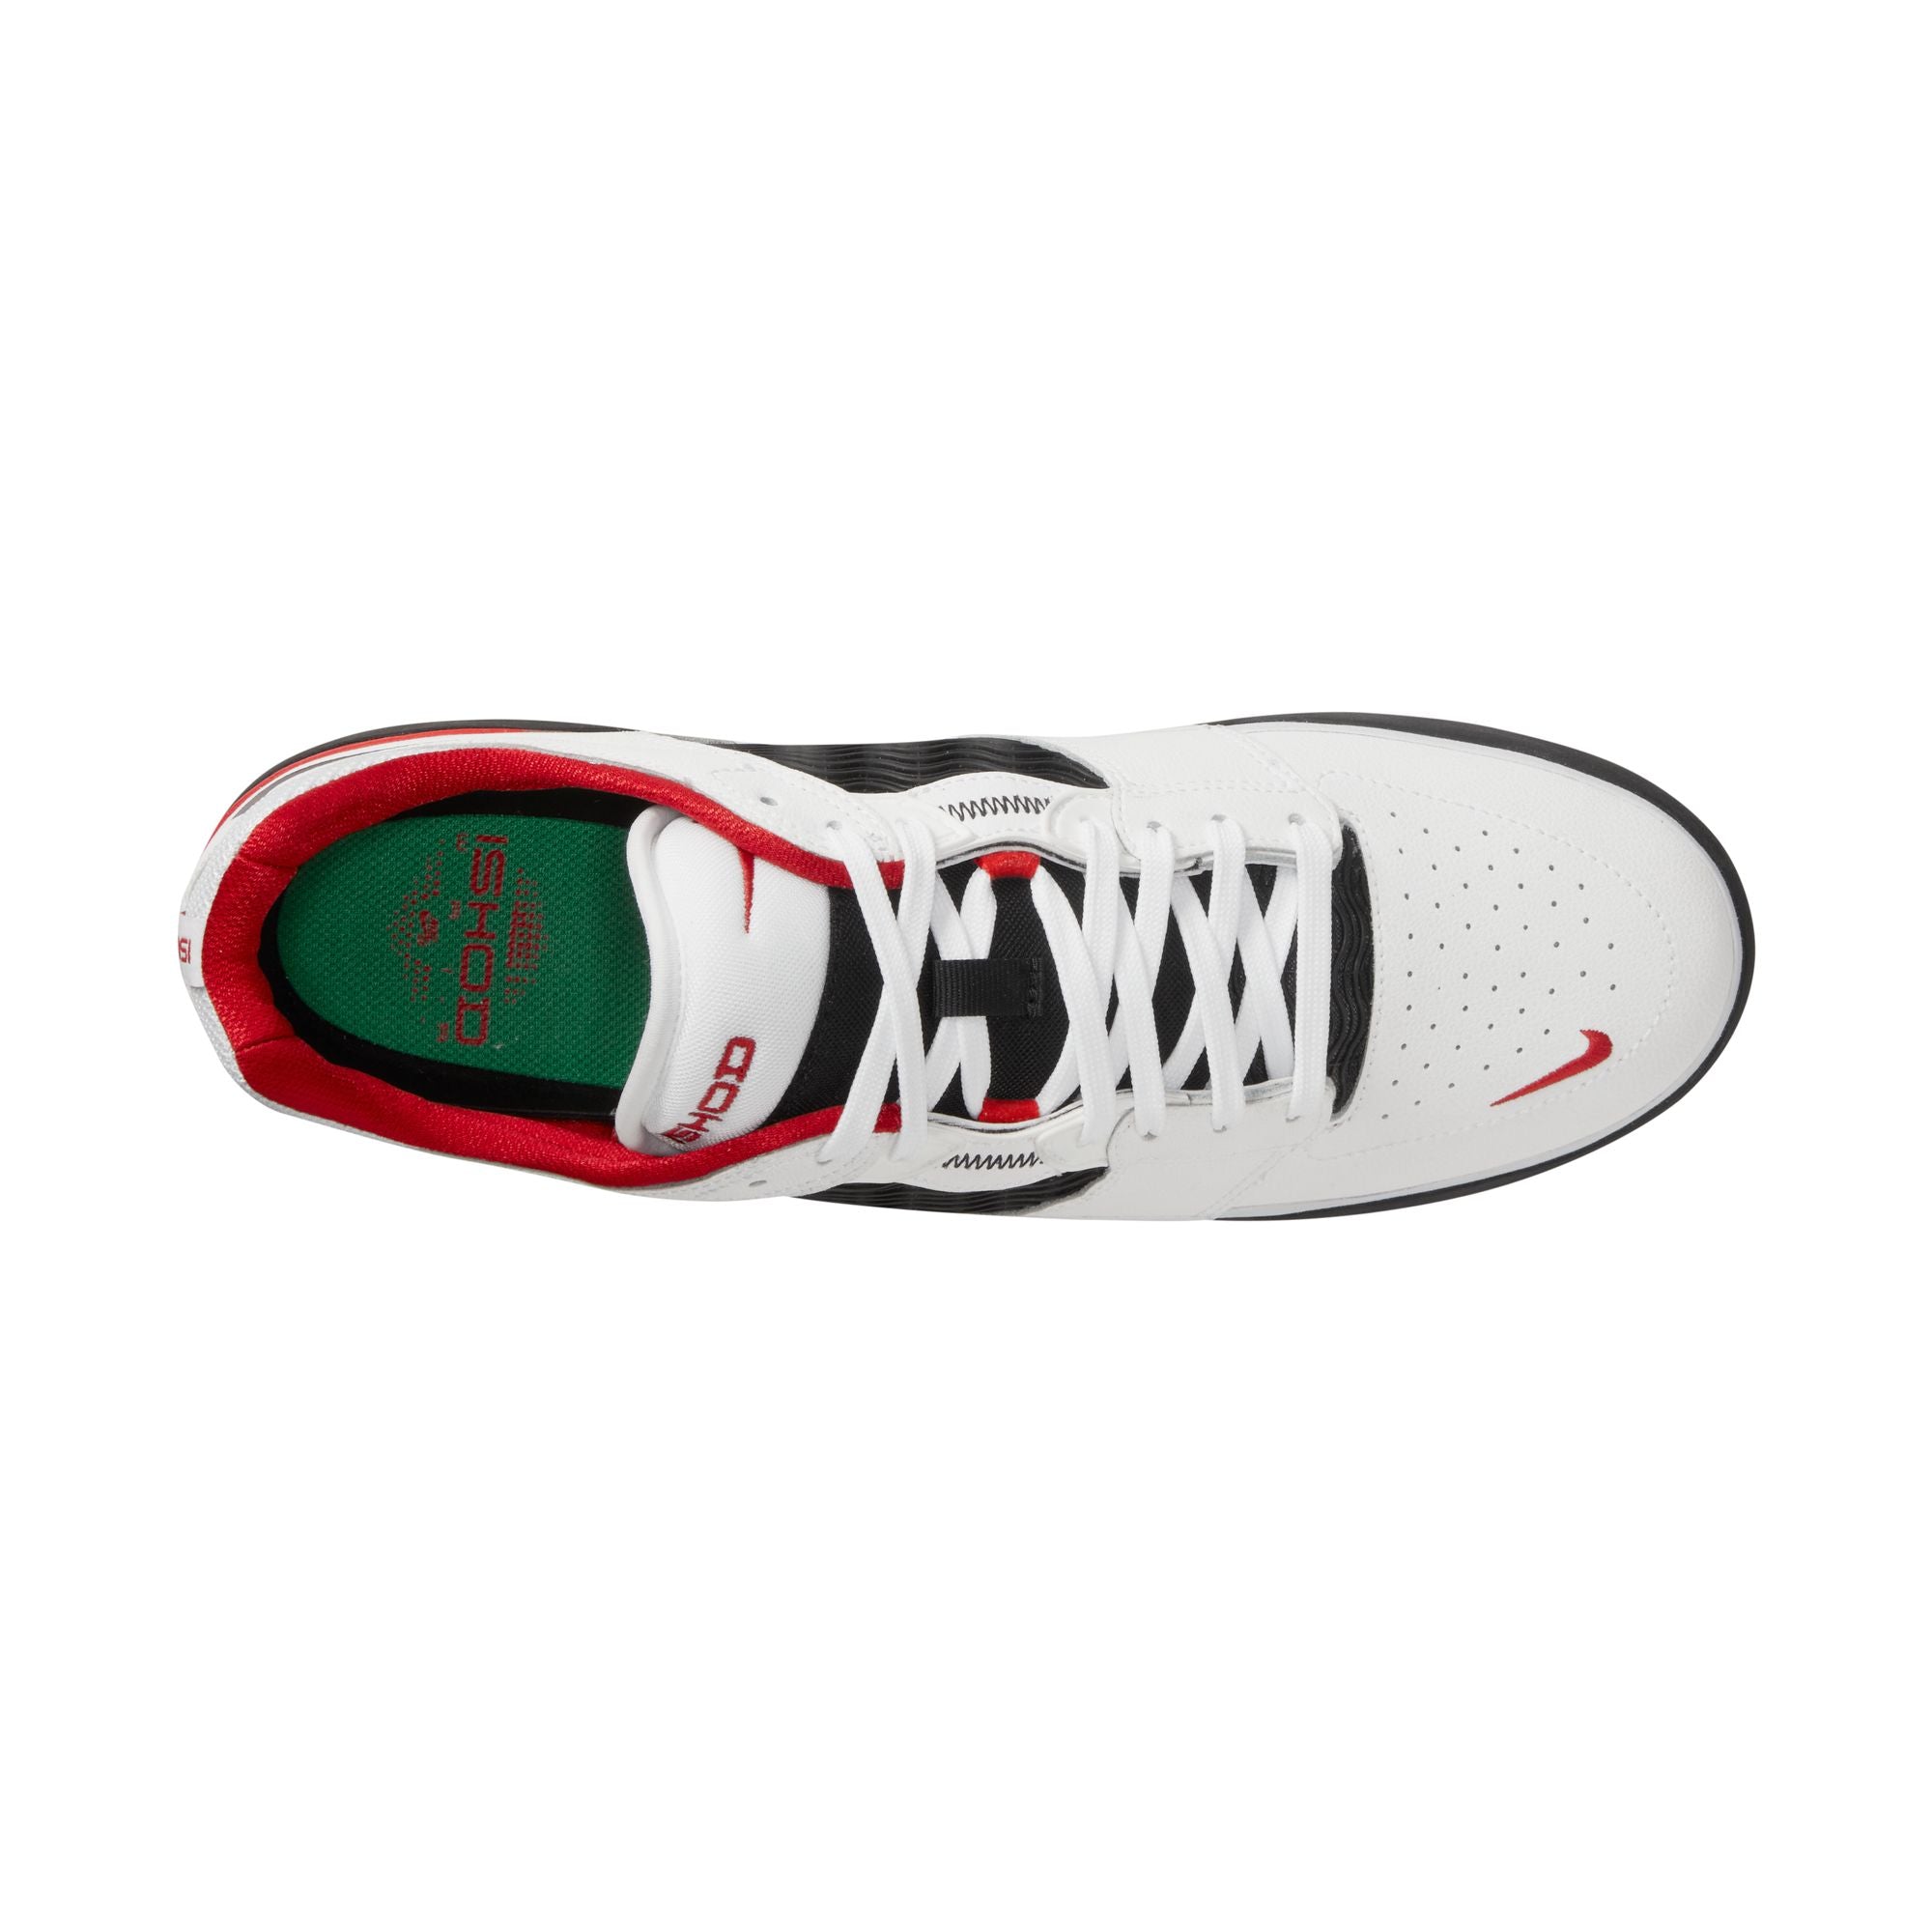 Nike SB Ishod Premium Pro Shoe - White/Black-University Red-Black